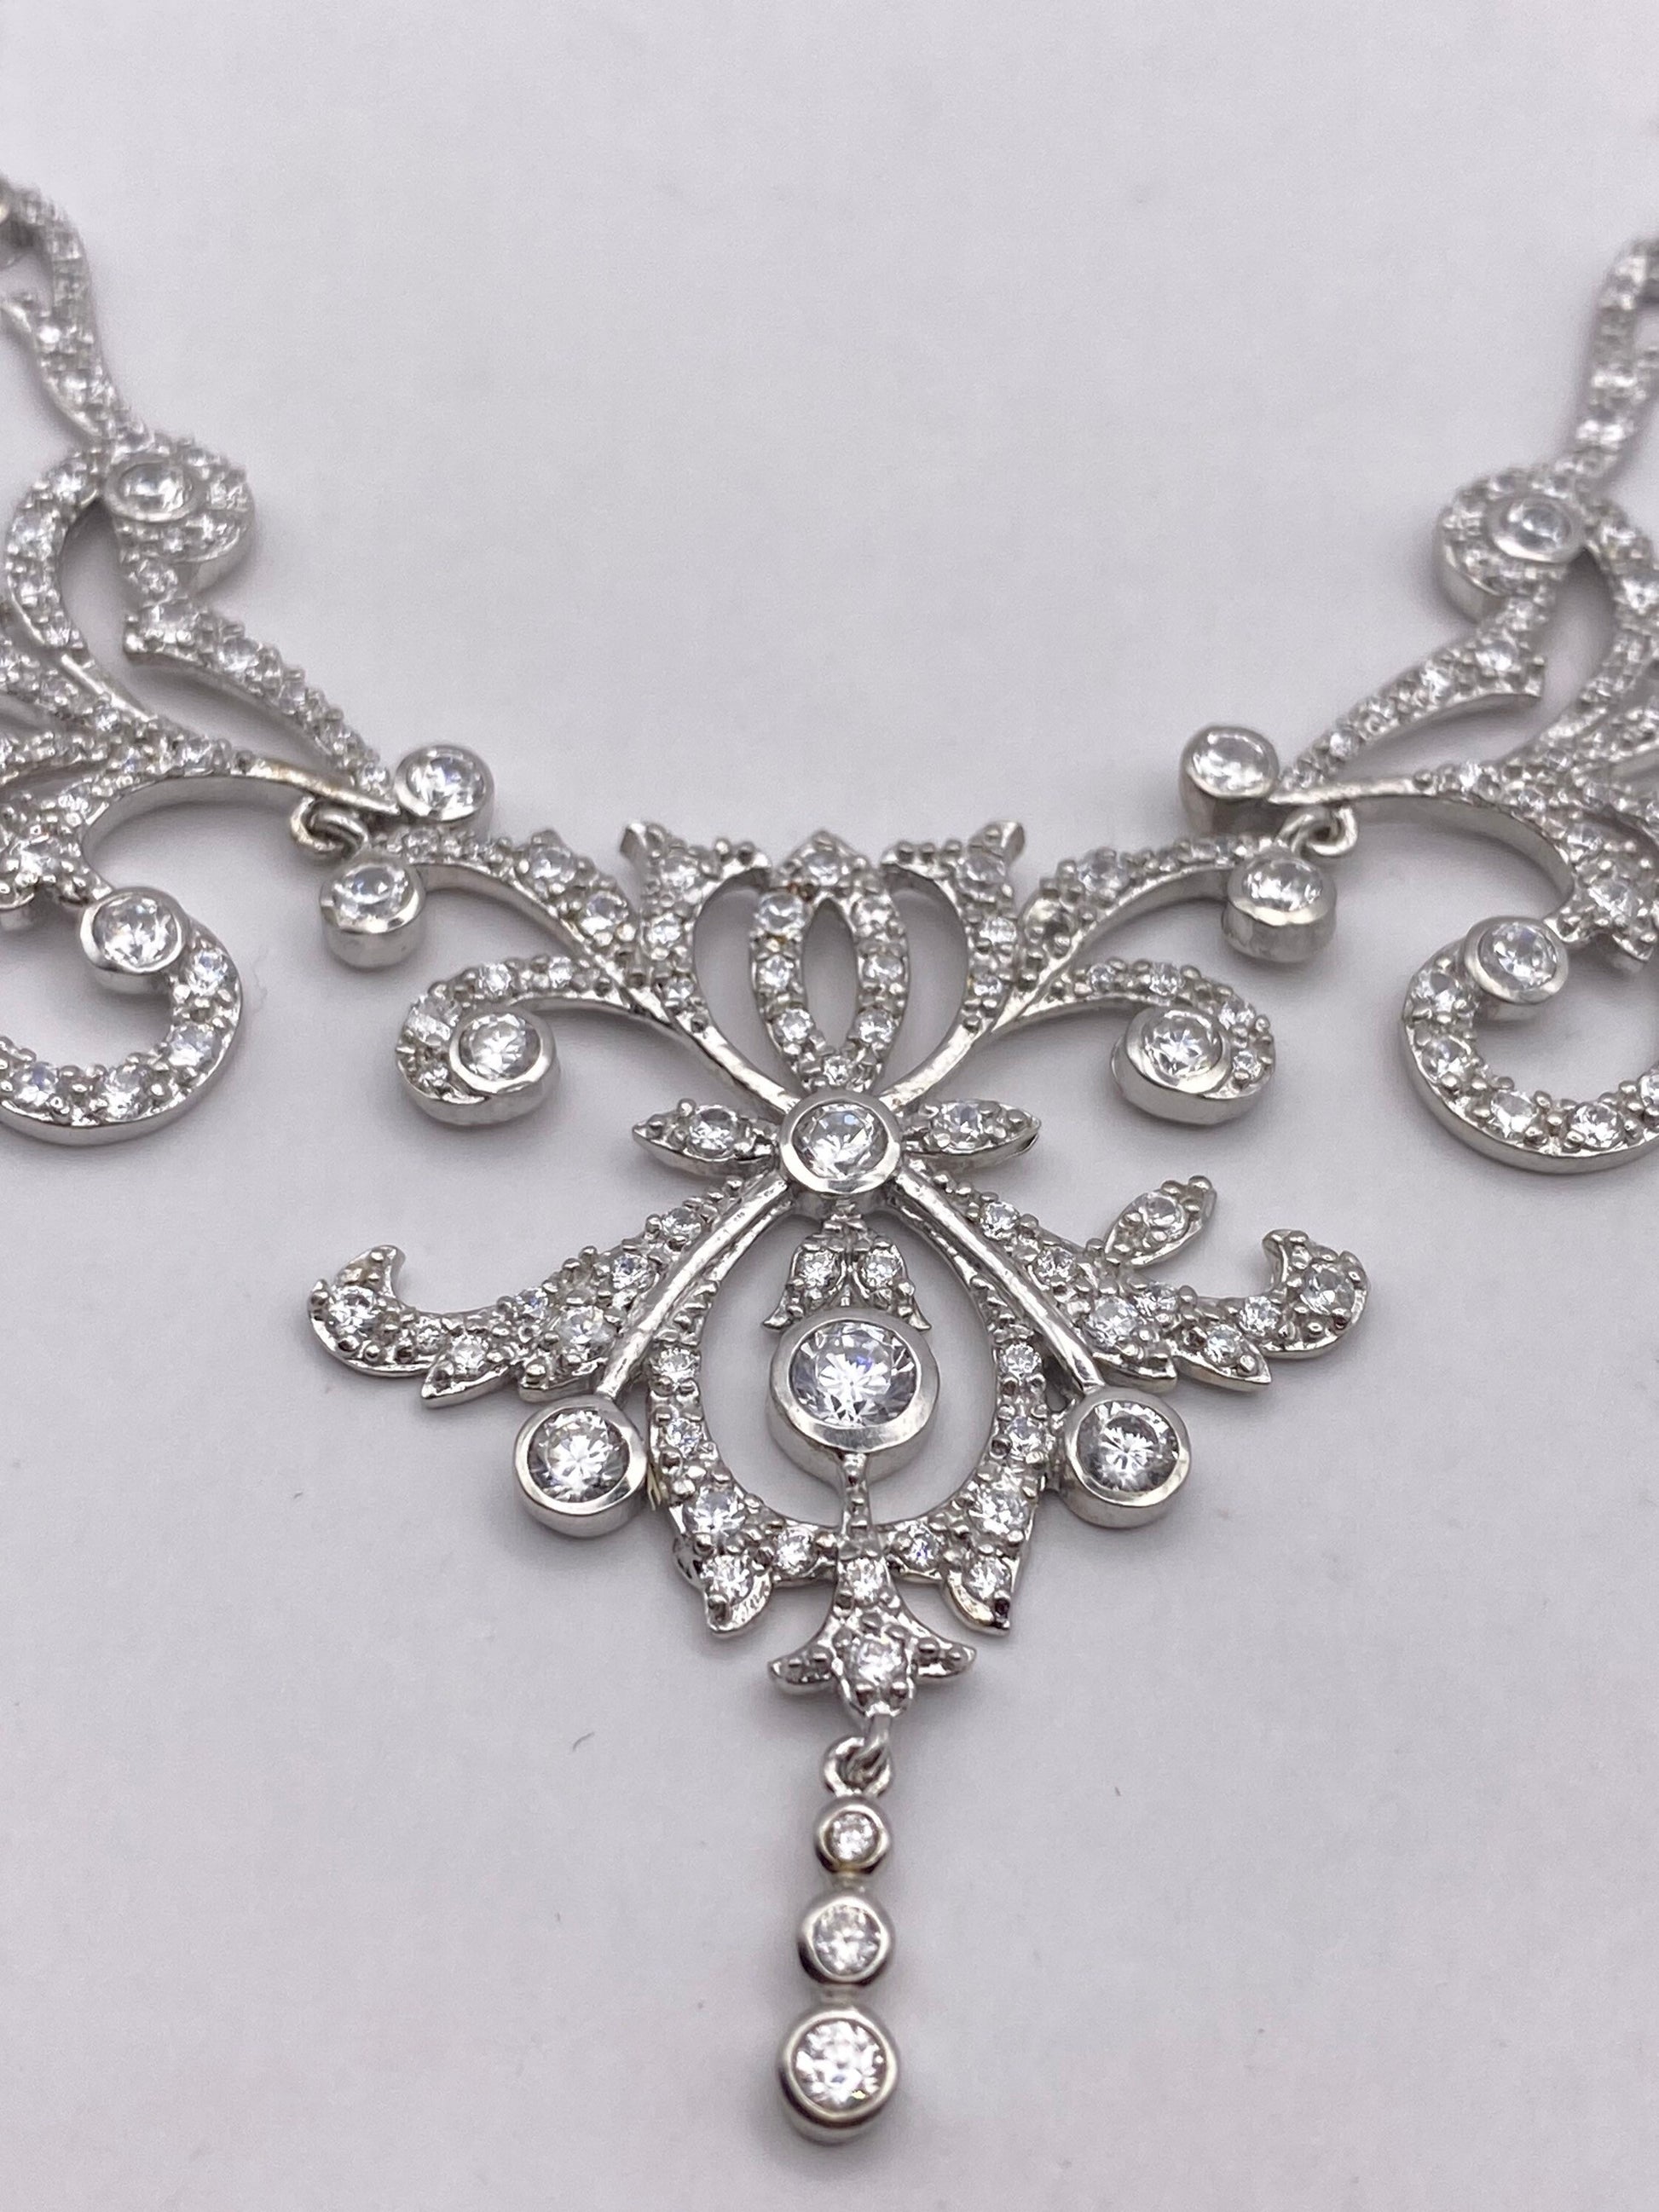 Vintage Crystal Choker Necklace 925 Sterling Silver